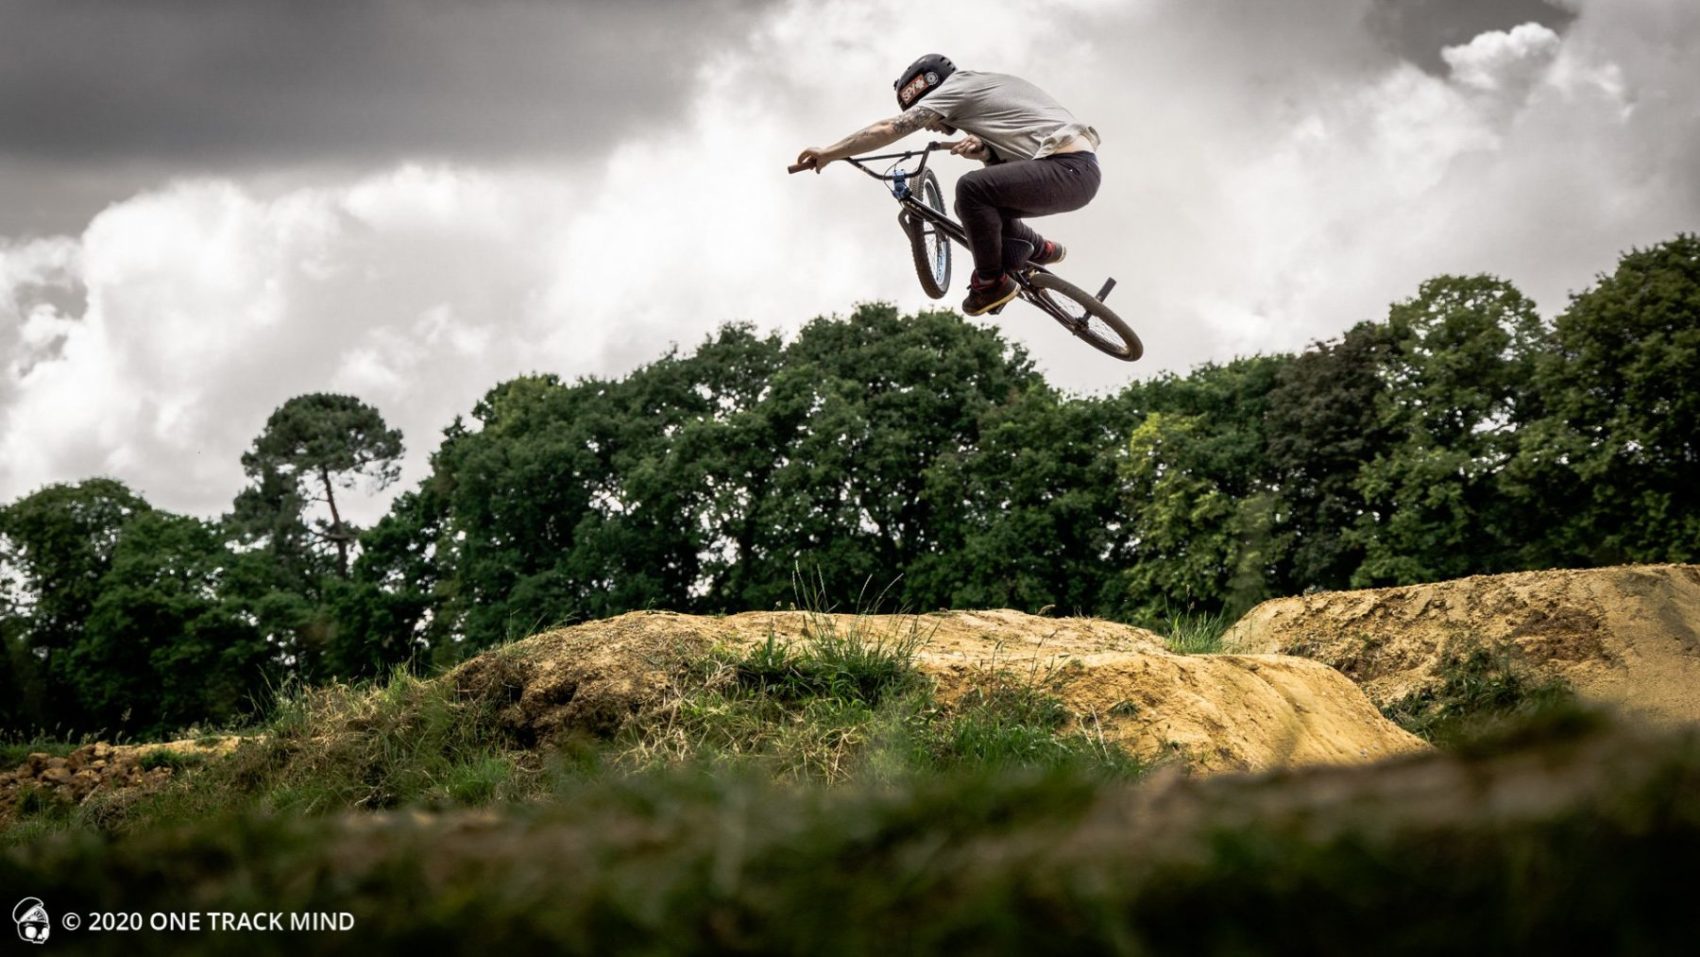 Photoshoot – Southampton Bike Park